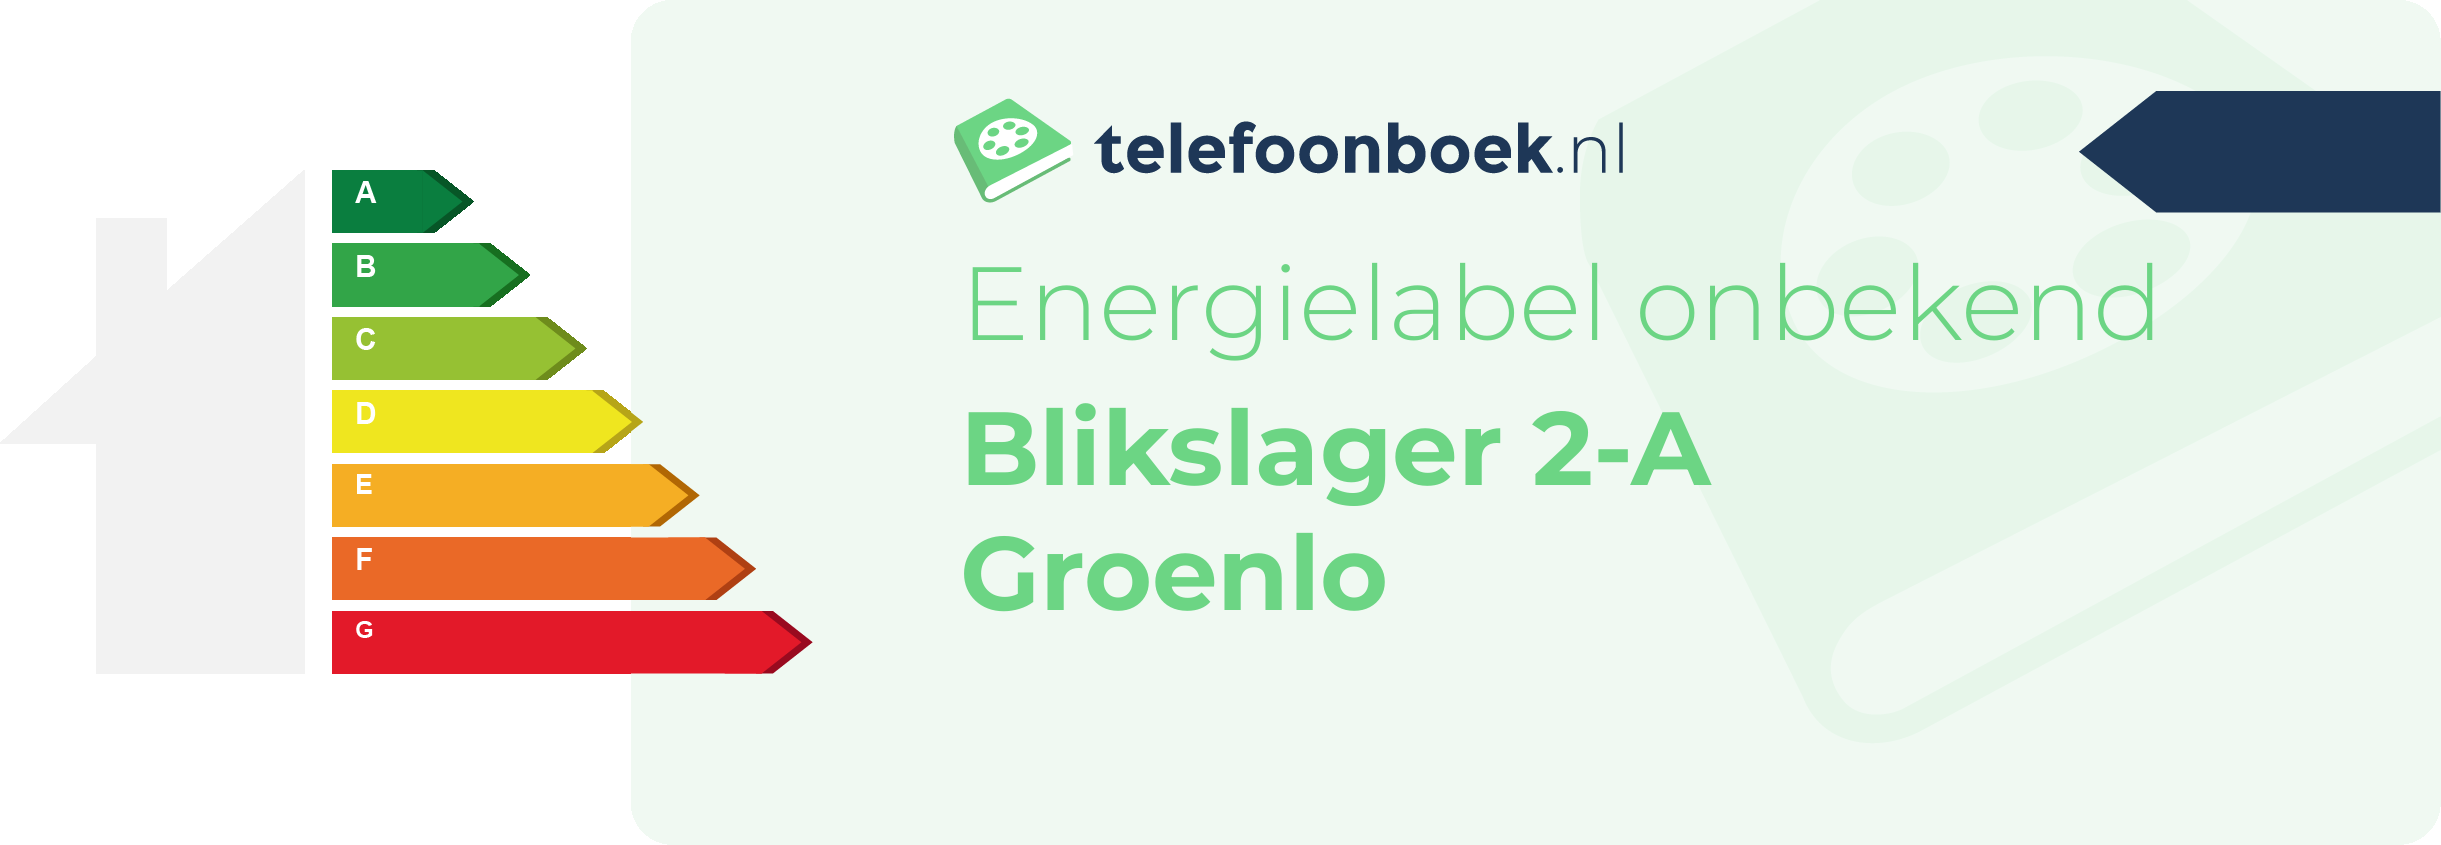 Energielabel Blikslager 2-A Groenlo